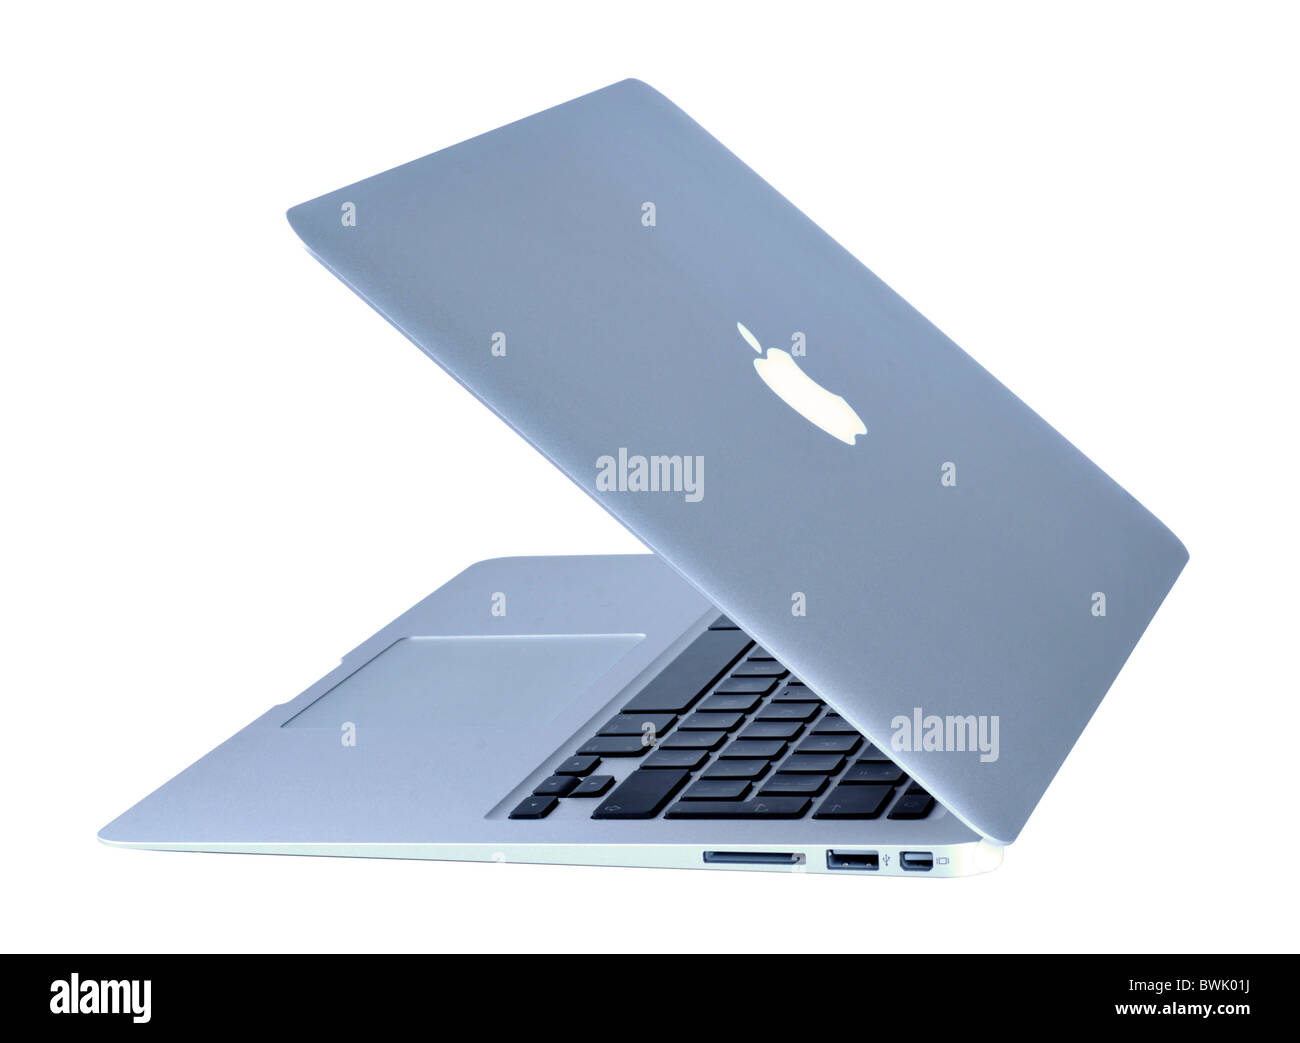 'Maria acbook' macbook computer portatile, il 2010 rilasciato 'Macbook Air" Foto Stock